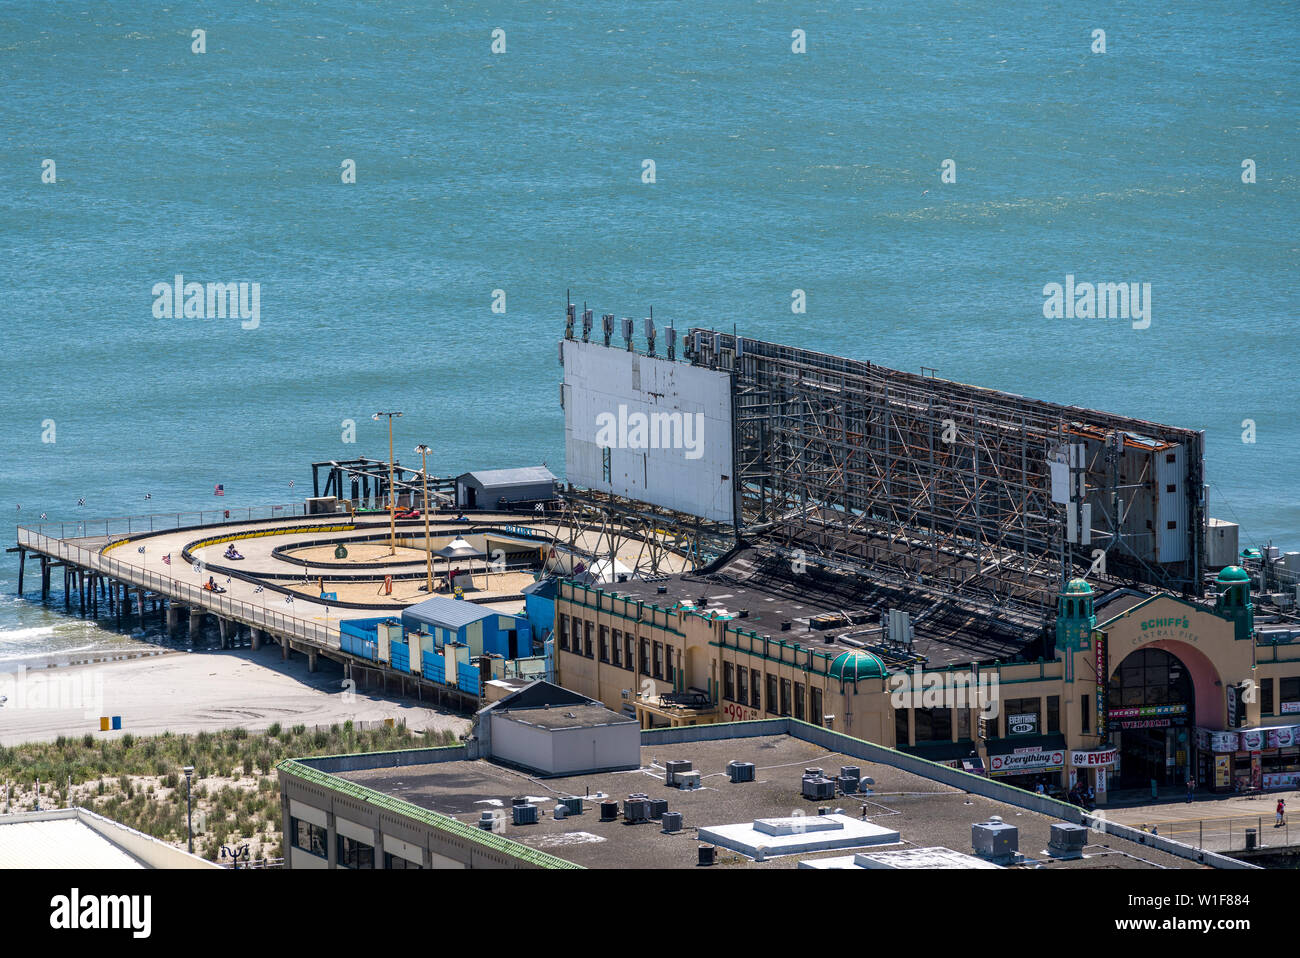 Schiffs Central Pier In Atlantic City On New Jersey Coastline Stock Photo Alamy